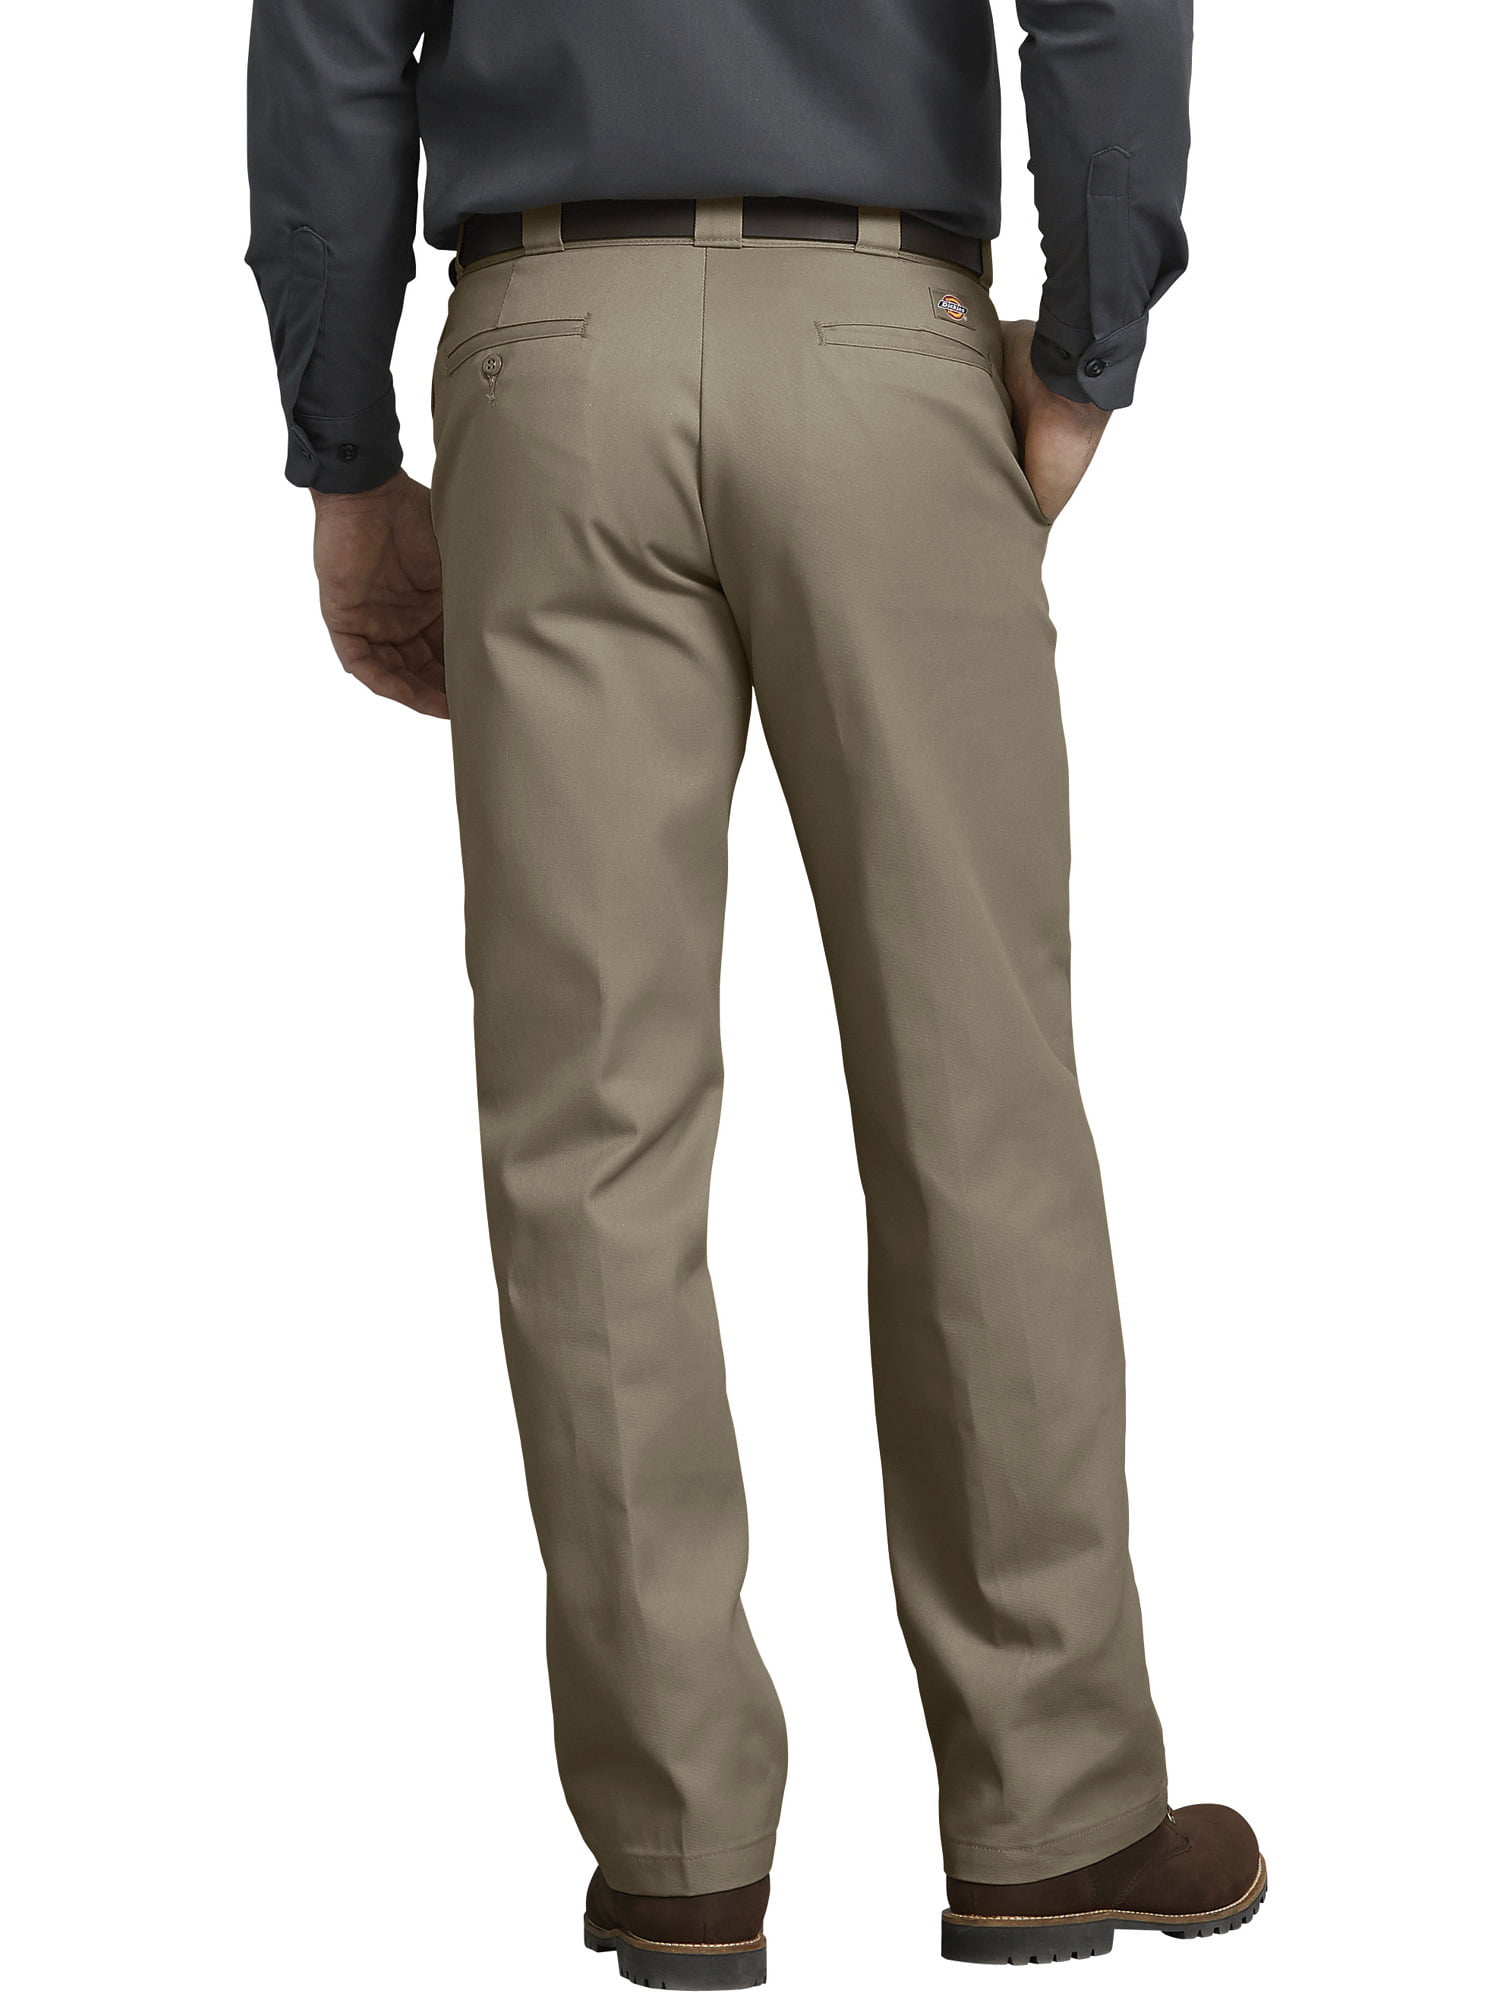 Dickies 874 Pants 4 Pockets (Straight Leg) Men's Work Wear Beautiful Shape.